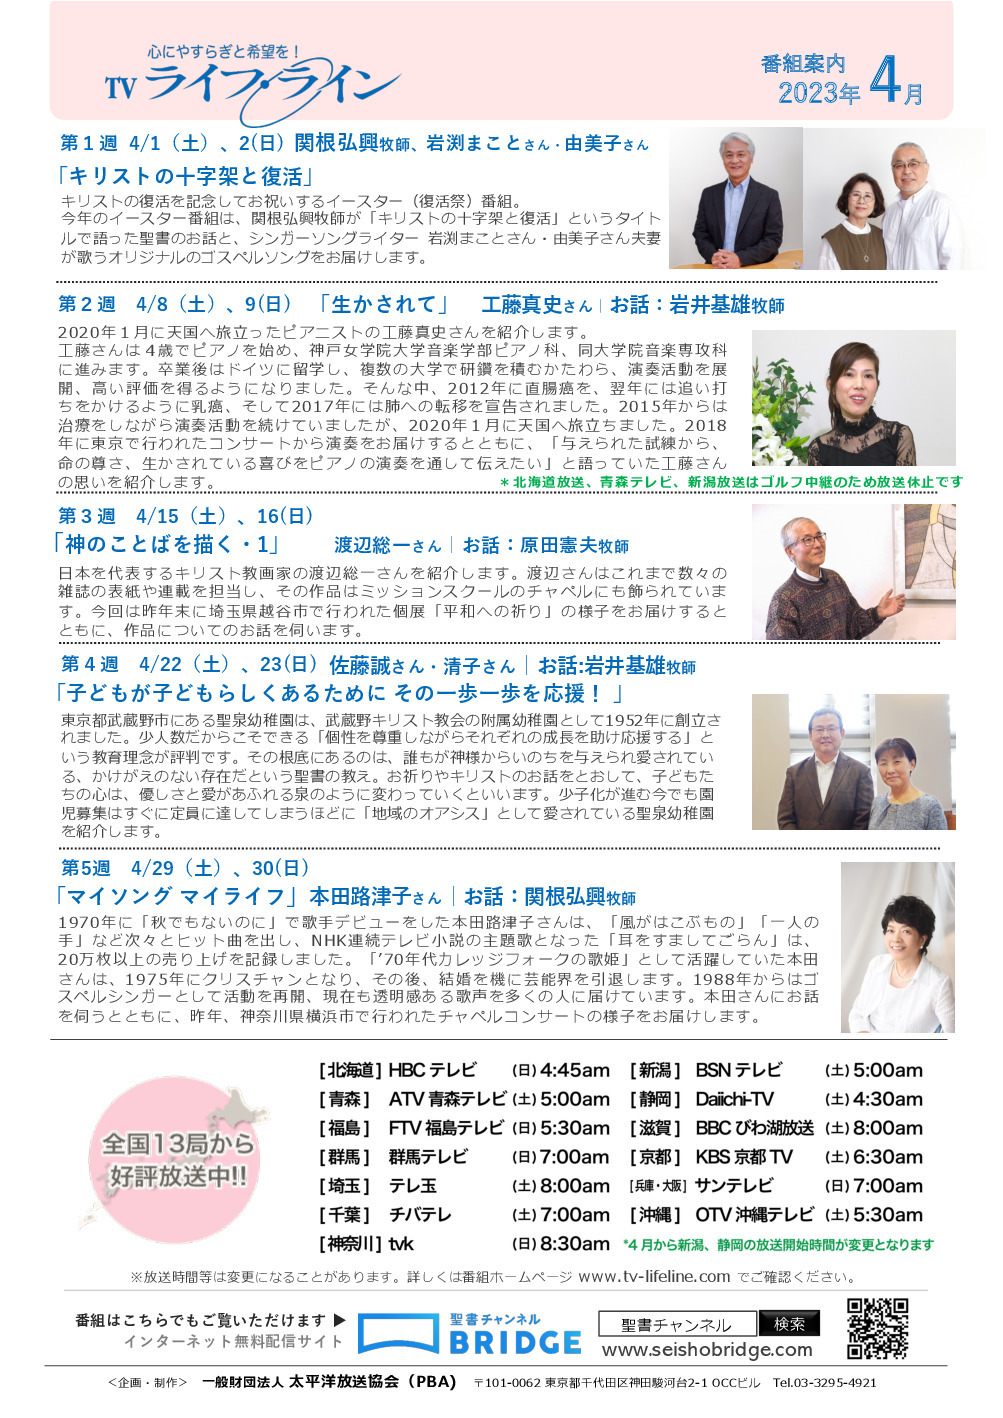 4/30(日)本田路津子コンサートin綱島教会TVK放送決定!